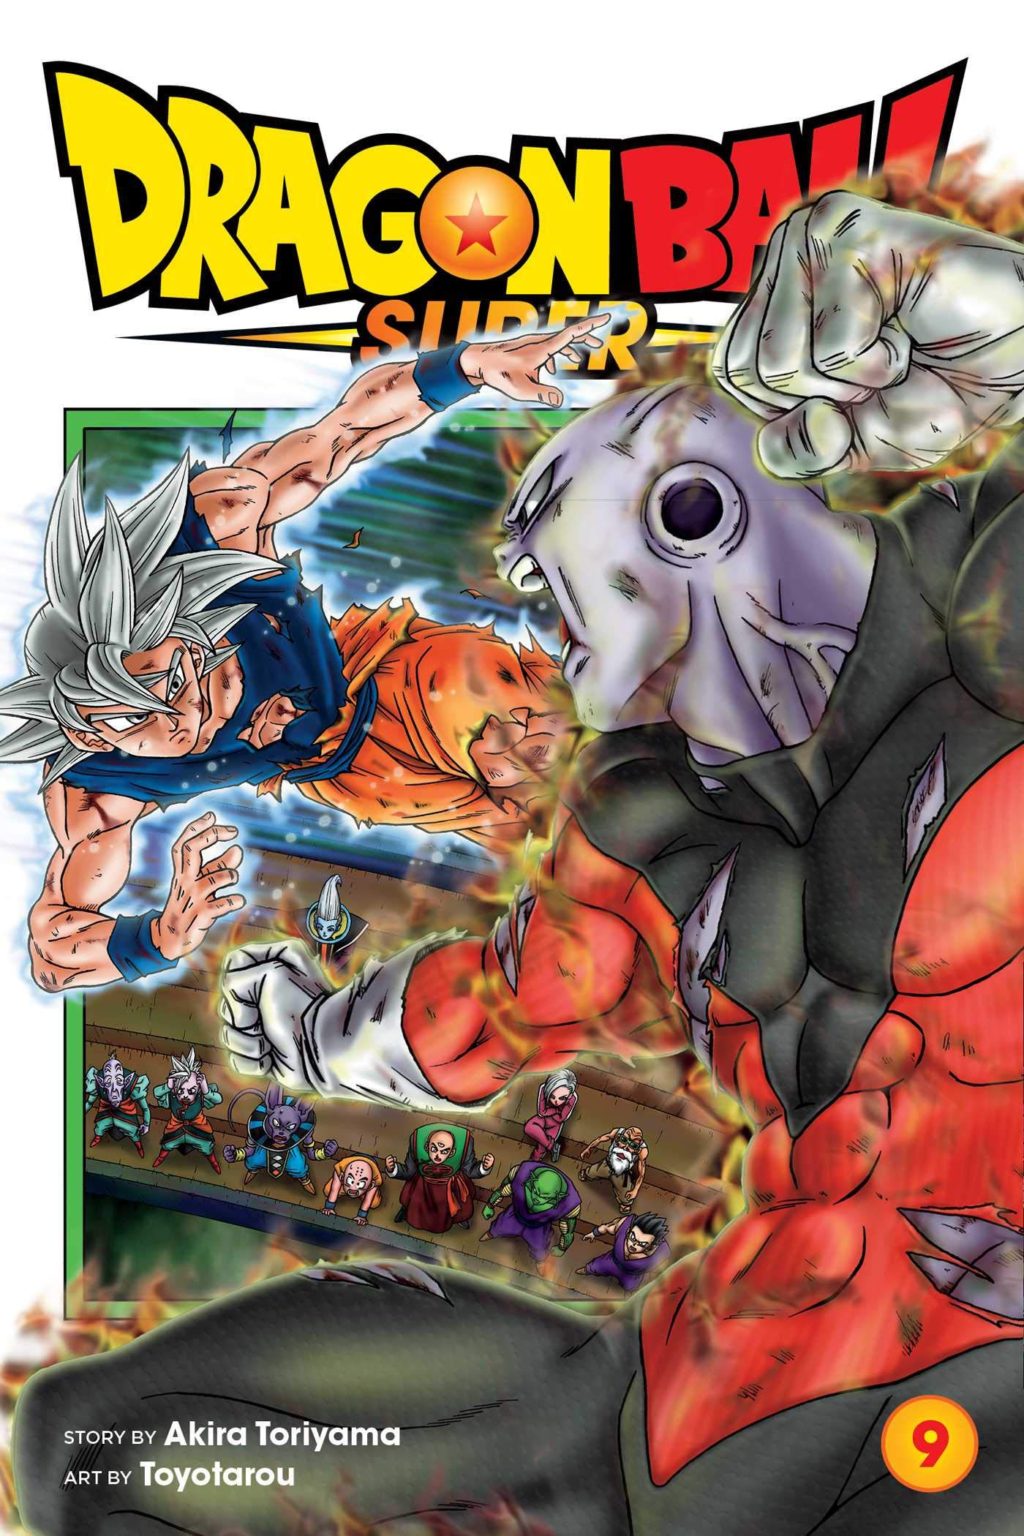 Dragon Ball Super Volume 9